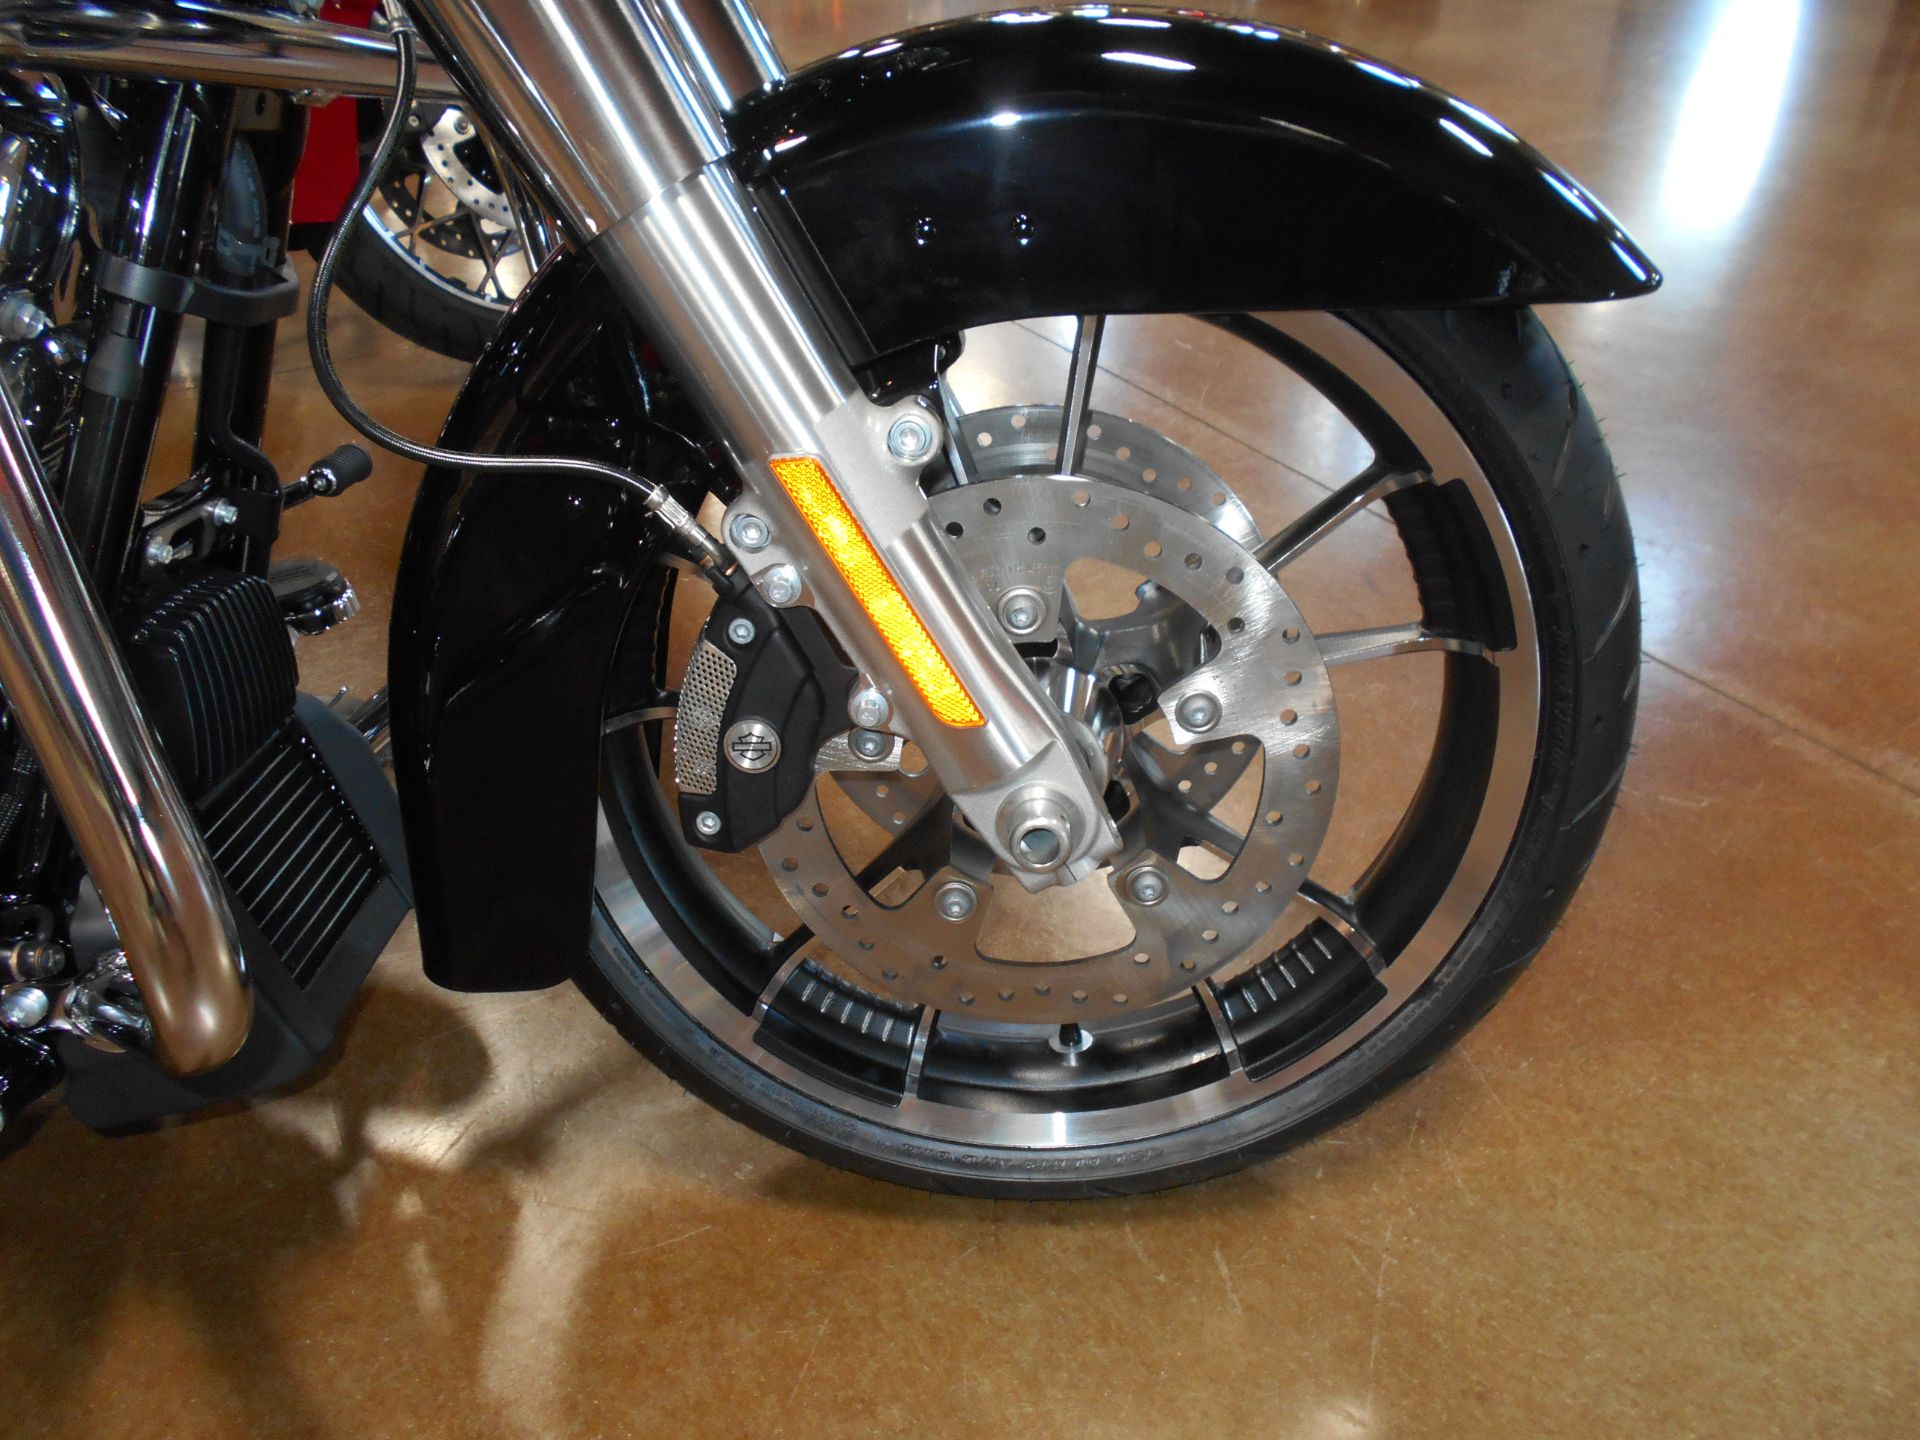 2022 Harley-Davidson Street Glide® in Mauston, Wisconsin - Photo 3